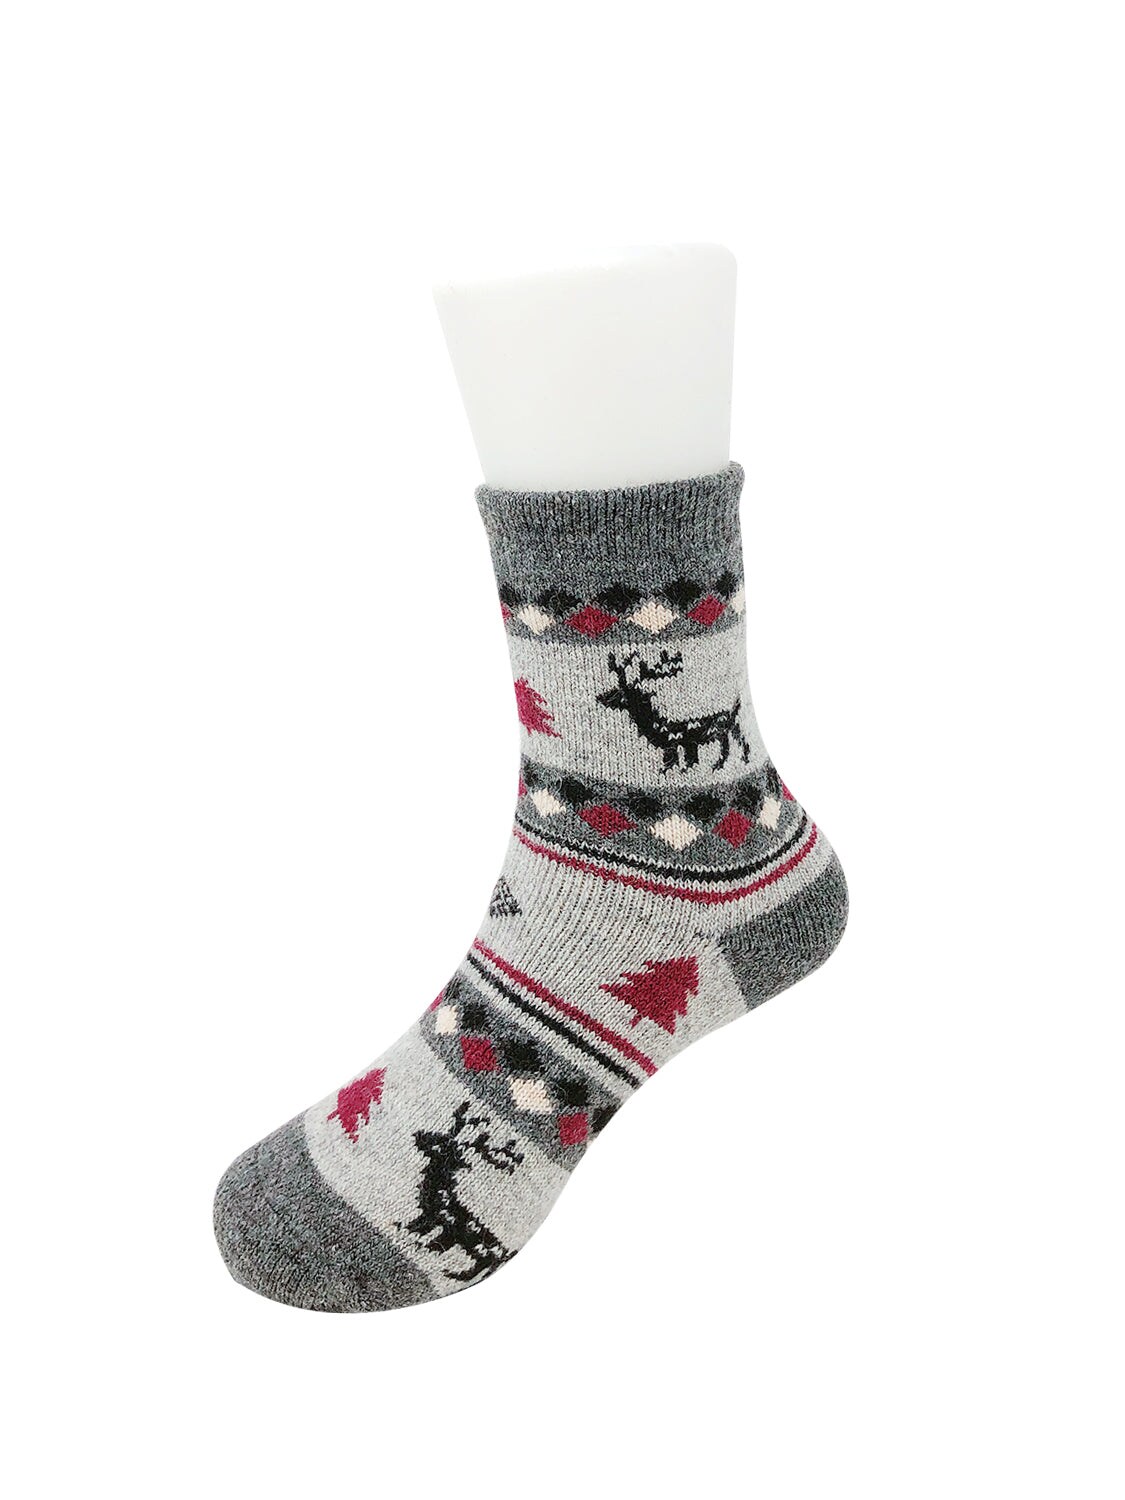 Wrapables Children&#x27;s Thick Winter Warm Wool Socks (Set of 6), Christmas Reindeer / Medium